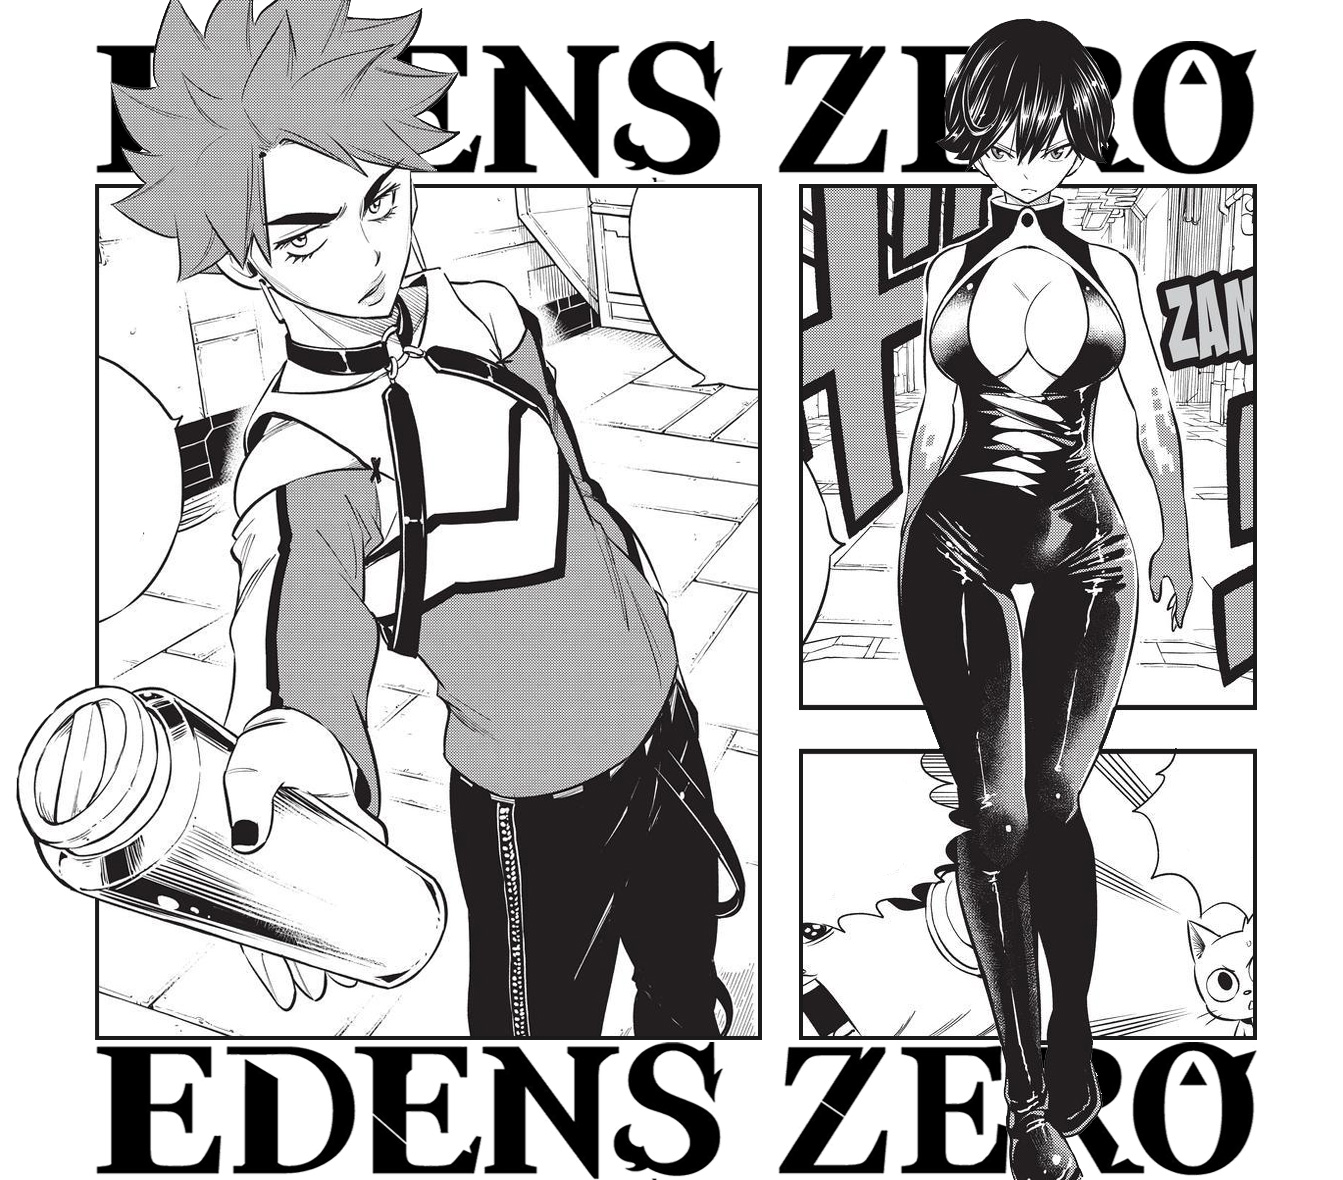 Edens Zero chapter 157 - Laguna and Ijuna encounter each other